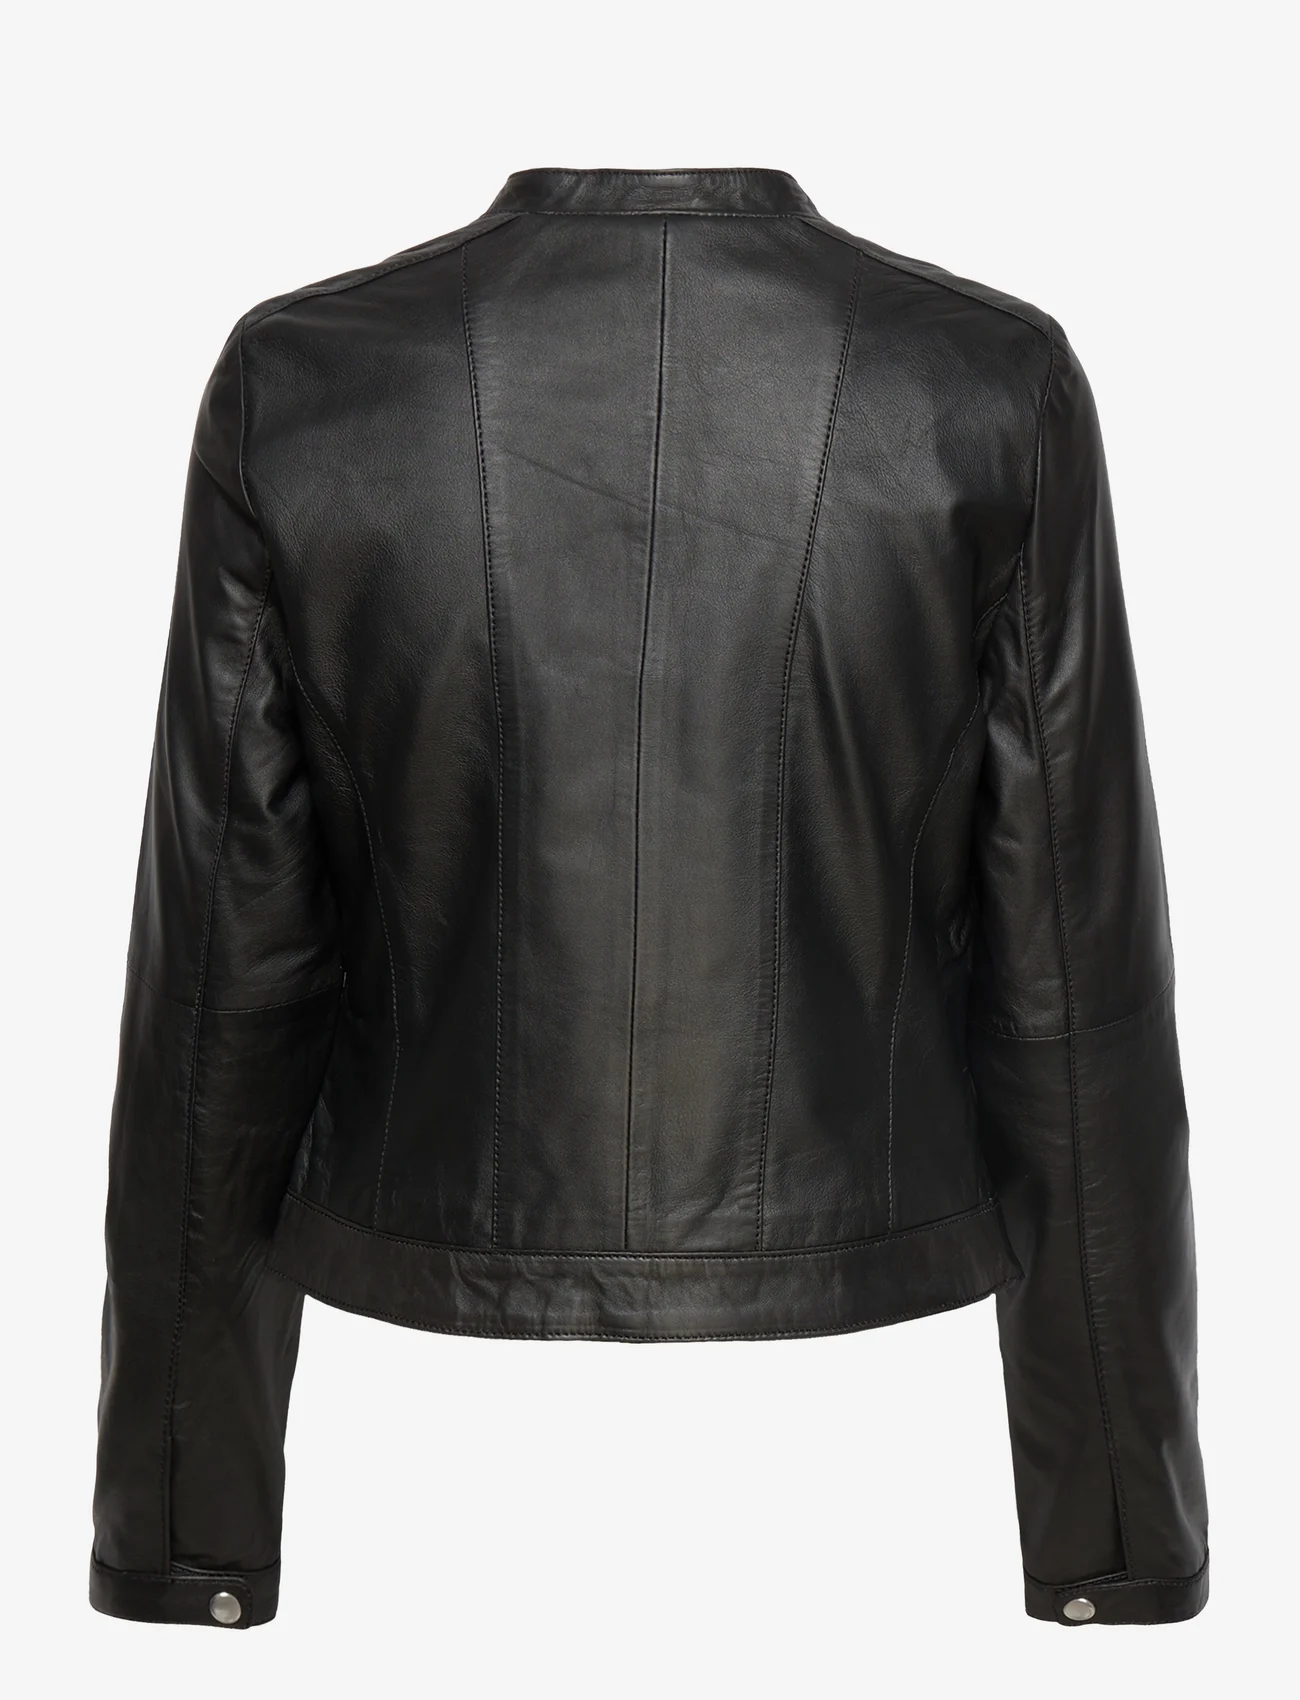 Jofama - Ariel Classic Leather Jacket - forårsjakker - black - 1